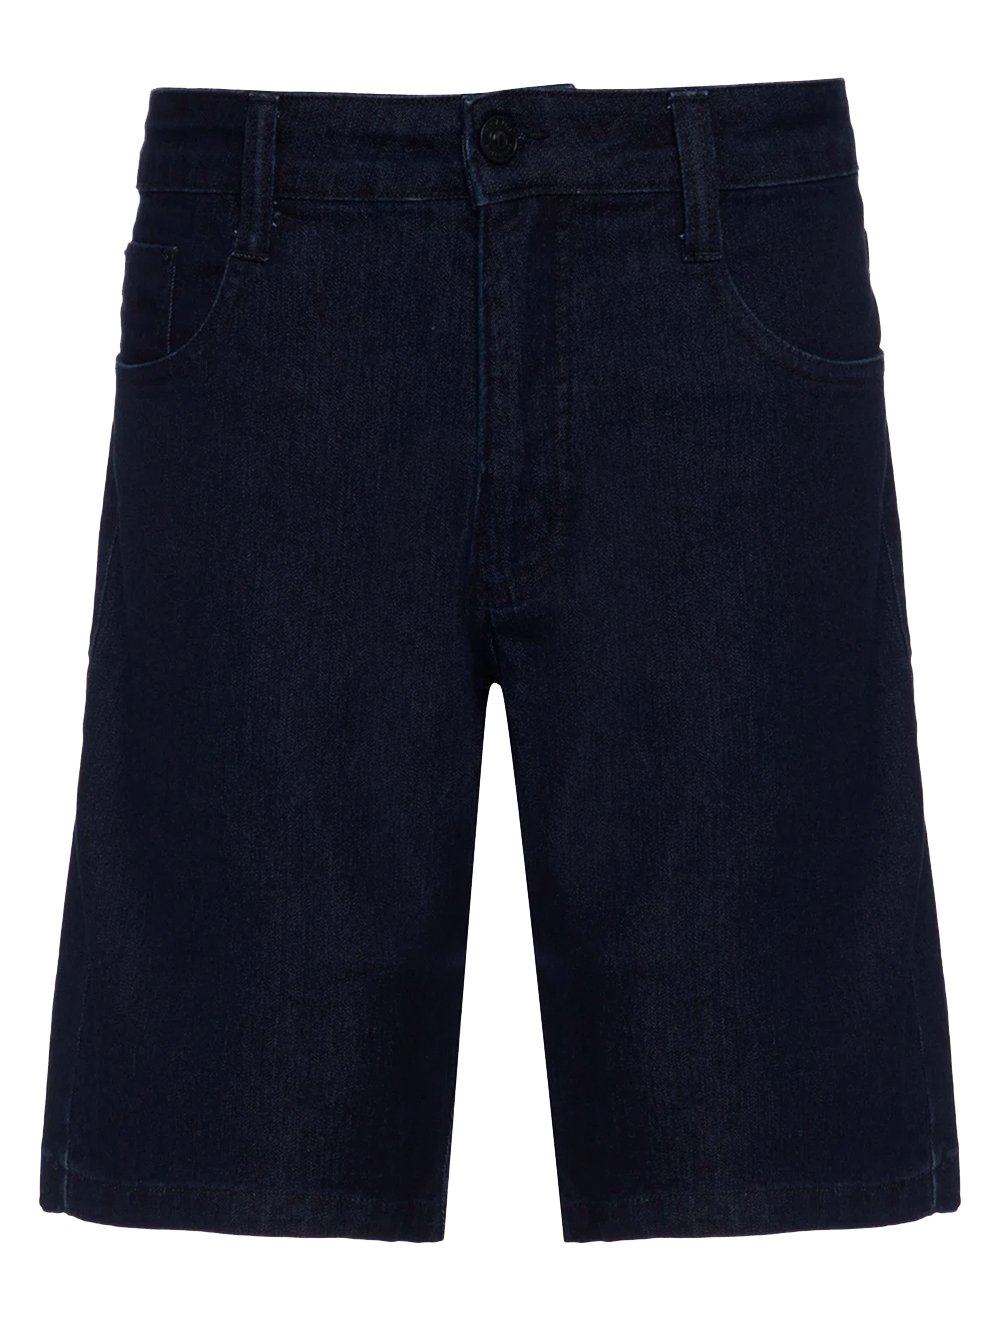 Bermuda Aramis Jeans Masculina Regular Basic 5 Pockets Escura